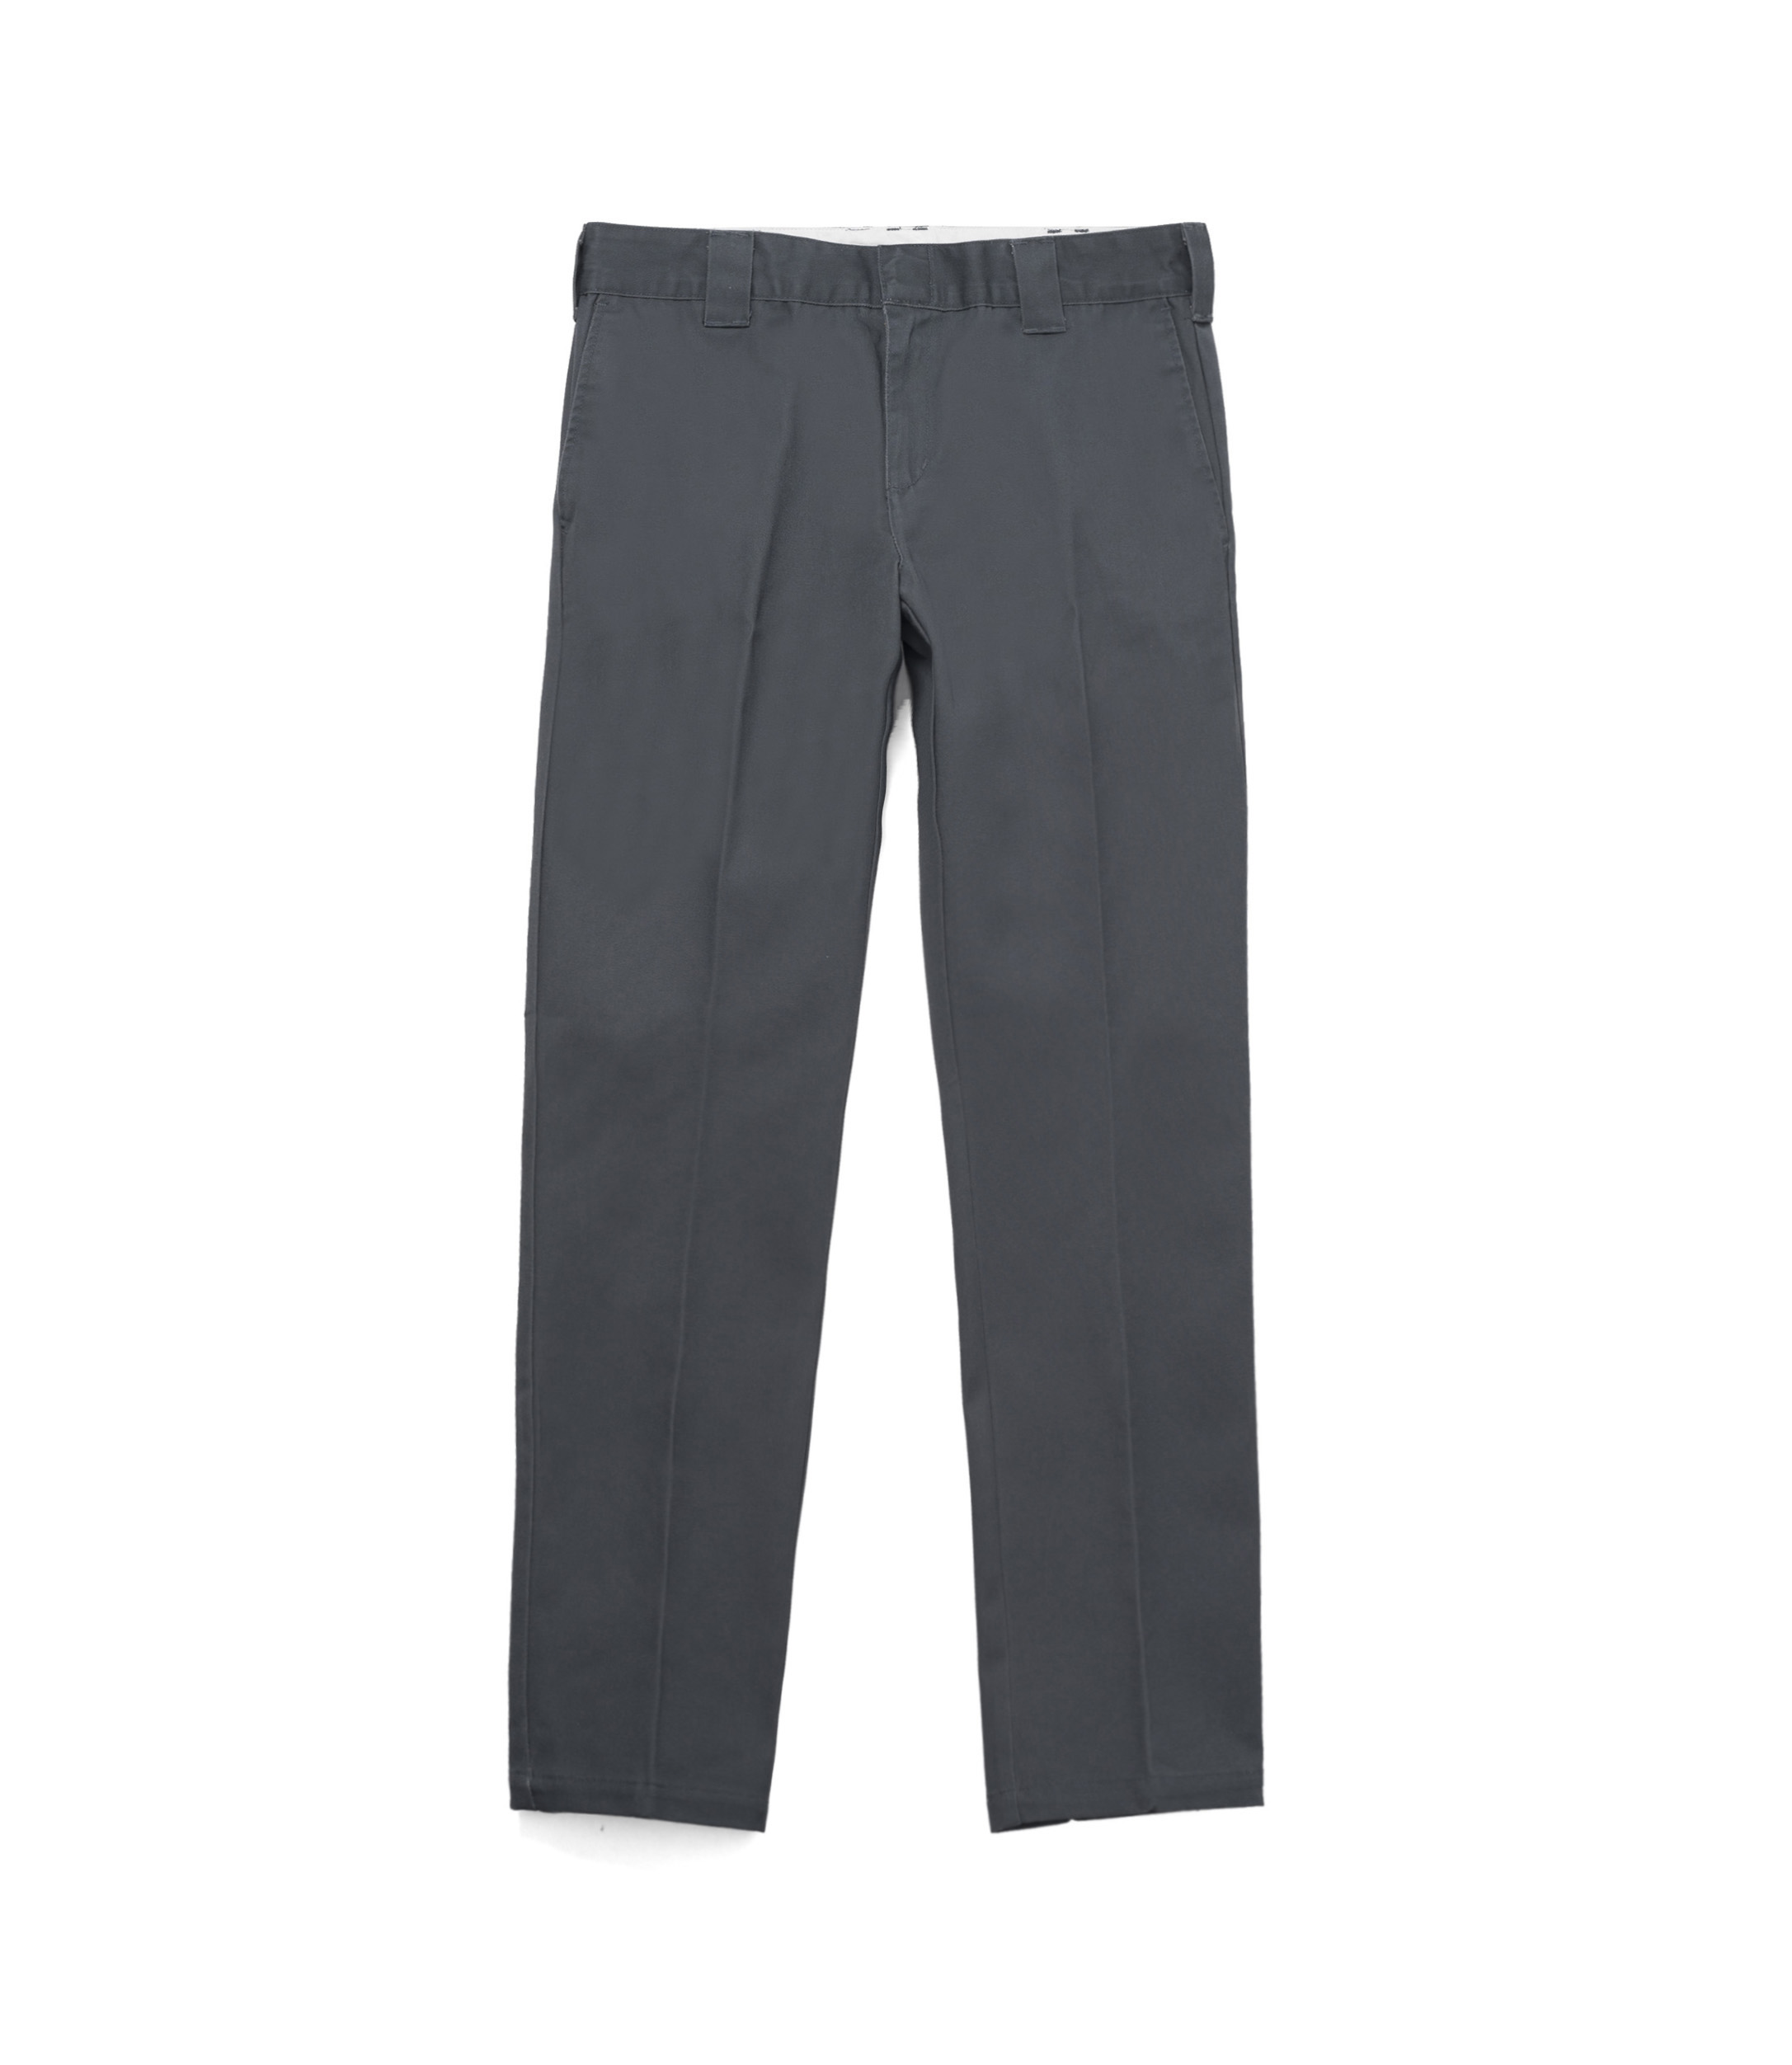 Shop Dickies Slim Fit 872 Work Pants Charcoal Grey at itk online store